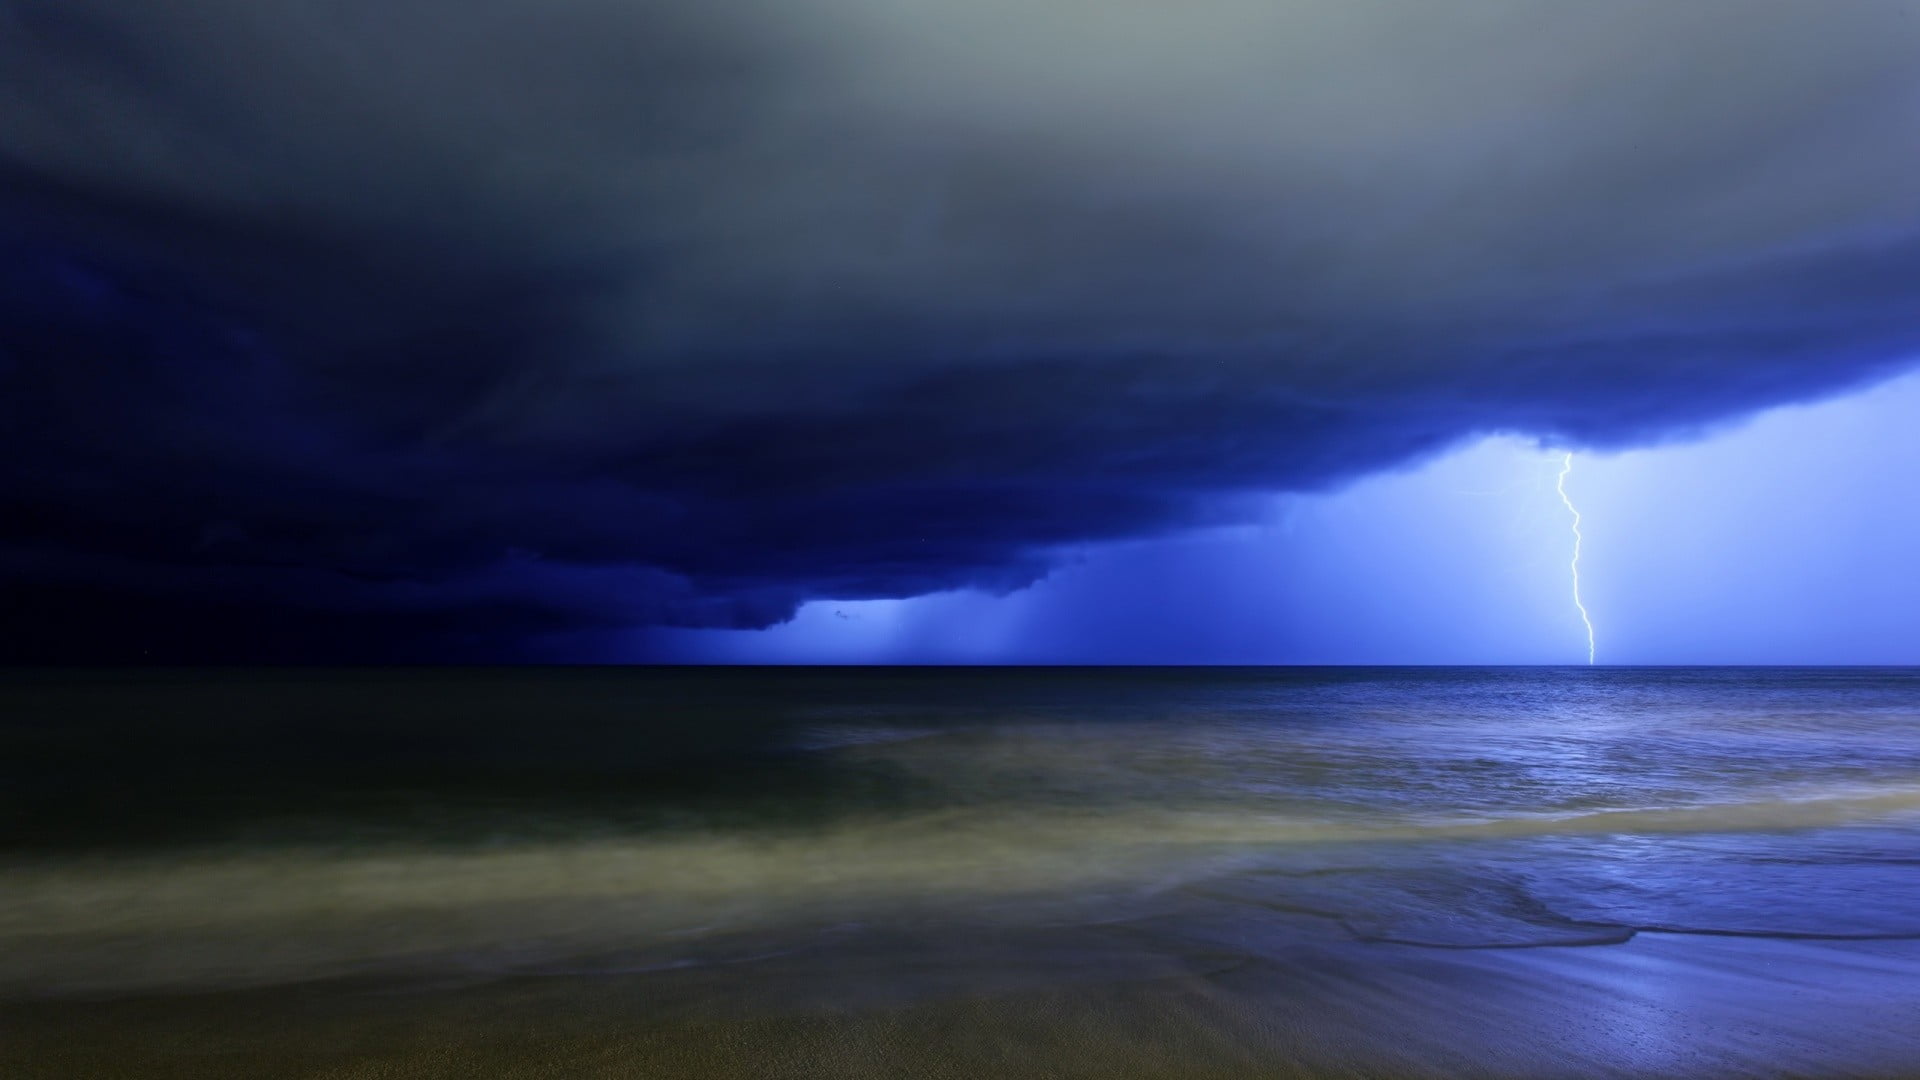 photo of storm near seashore, nature, landscape, storm, lightning